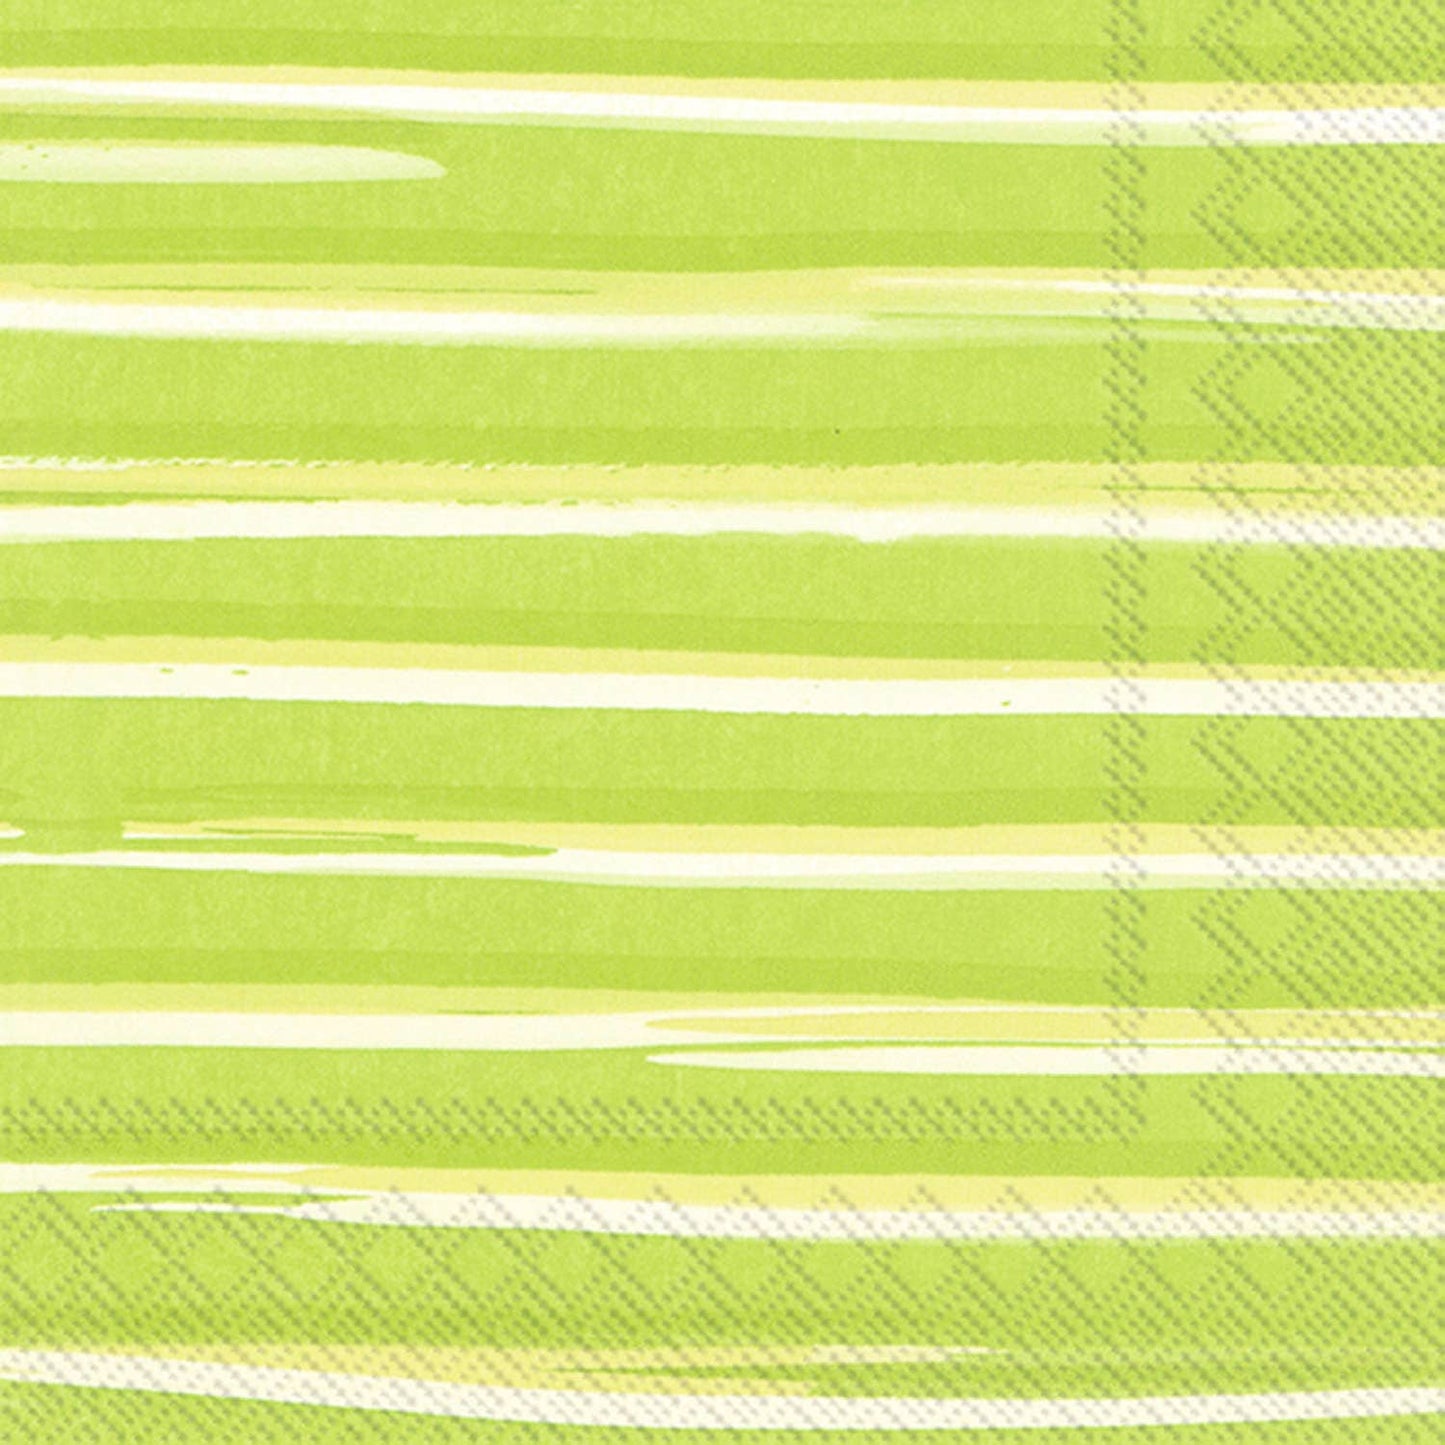 Boston International - Paper Cocktail Napkins Pack of 20 Quito light green - Fenwick & OliverBoston International - Paper Cocktail Napkins Pack of 20 Quito light greenBoston InternationalFenwick & OliverC912629